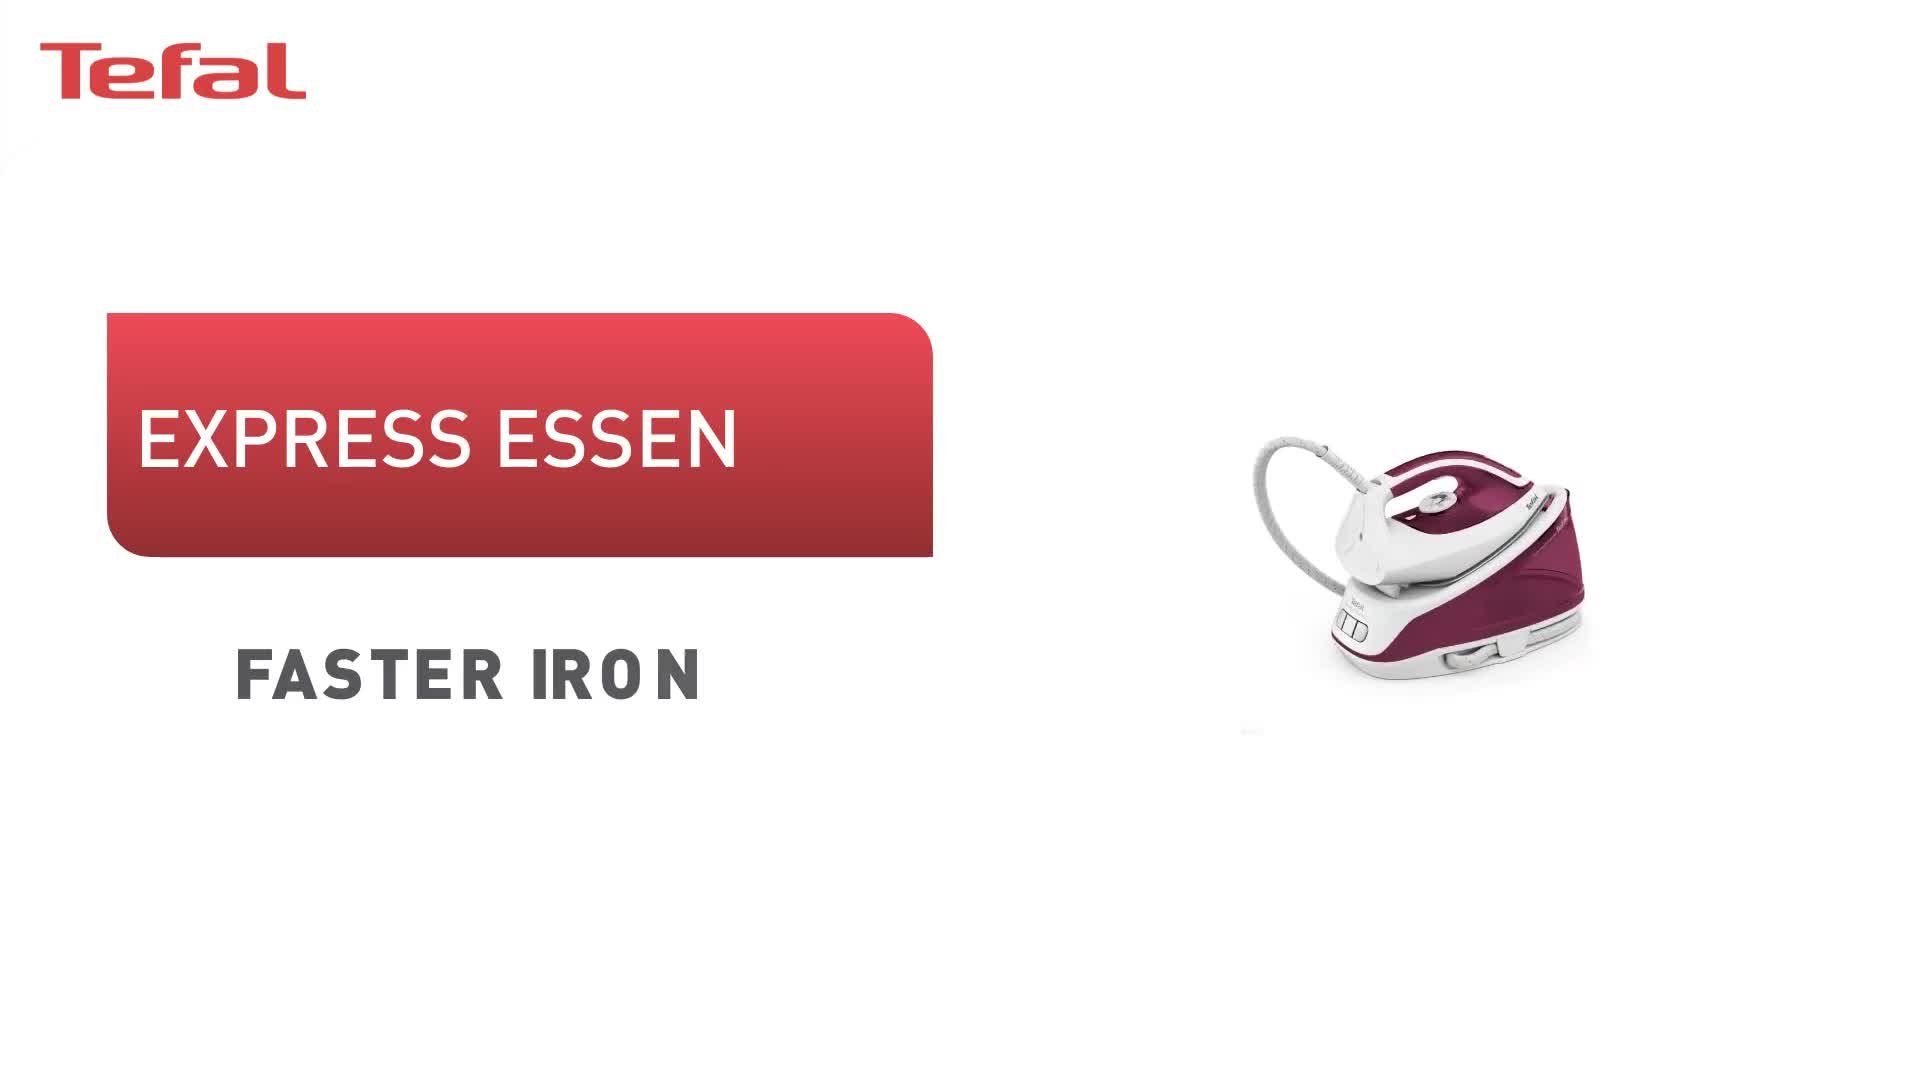 Steam Express Iron Irons Generator SV6110 | Buy Essential | Tefal Argos